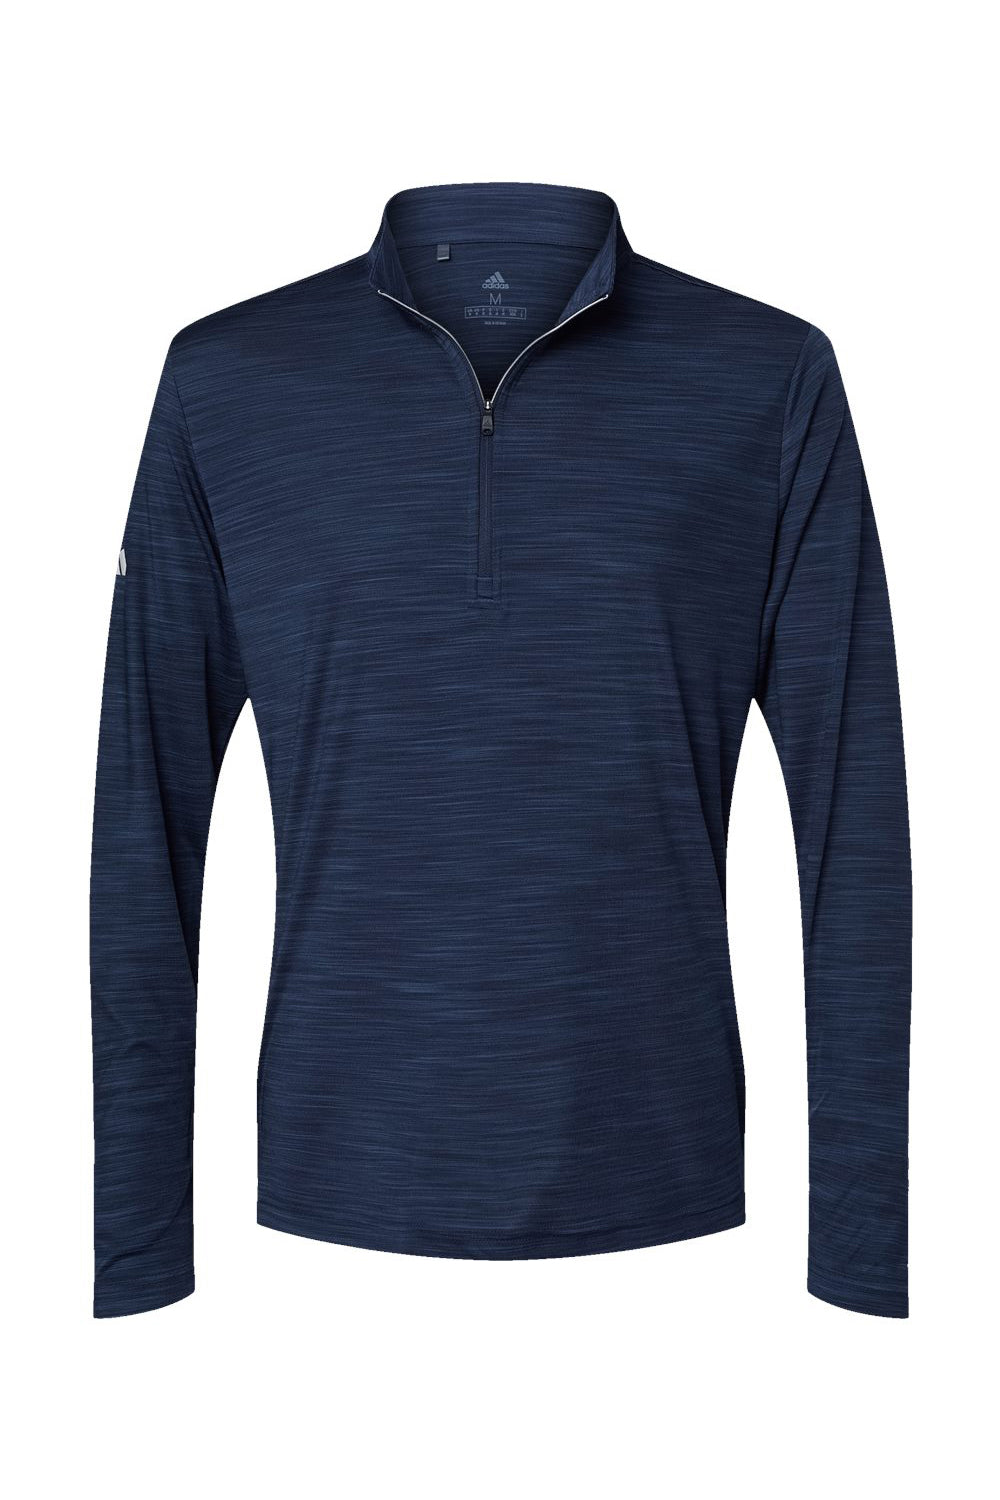 Adidas A475 Mens Moisture Wicking 1/4 Zip Sweatshirt Collegiate Navy Blue Melange Flat Front